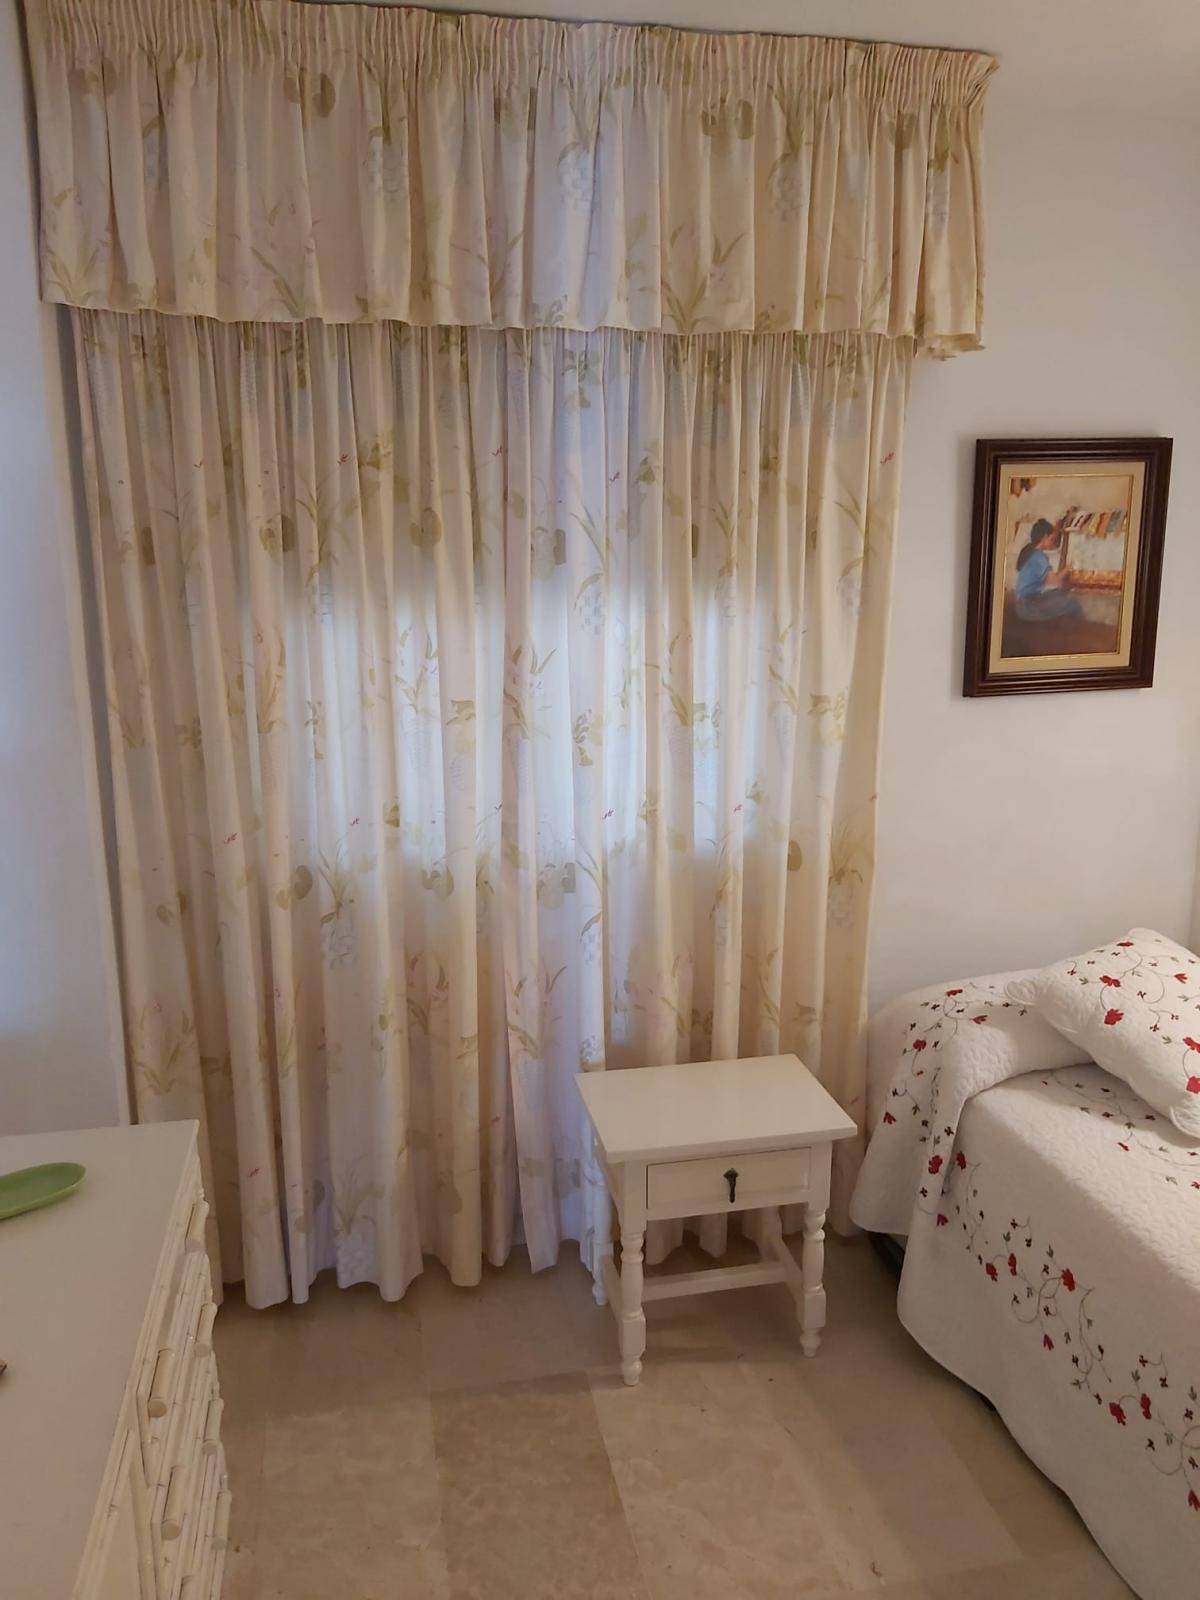 Flat for rent in Fuengirola